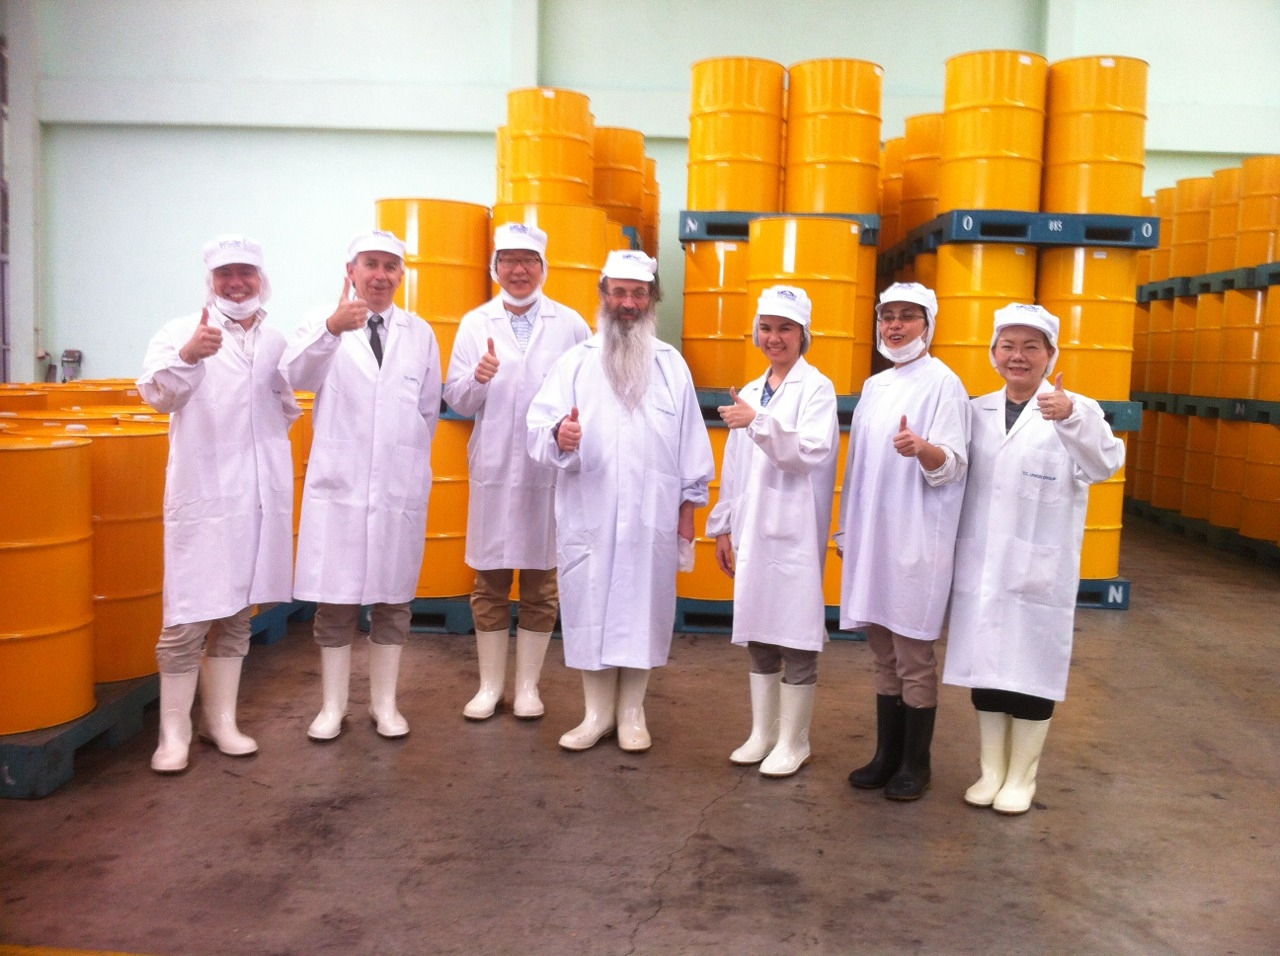 Tuna production facility in Thailand